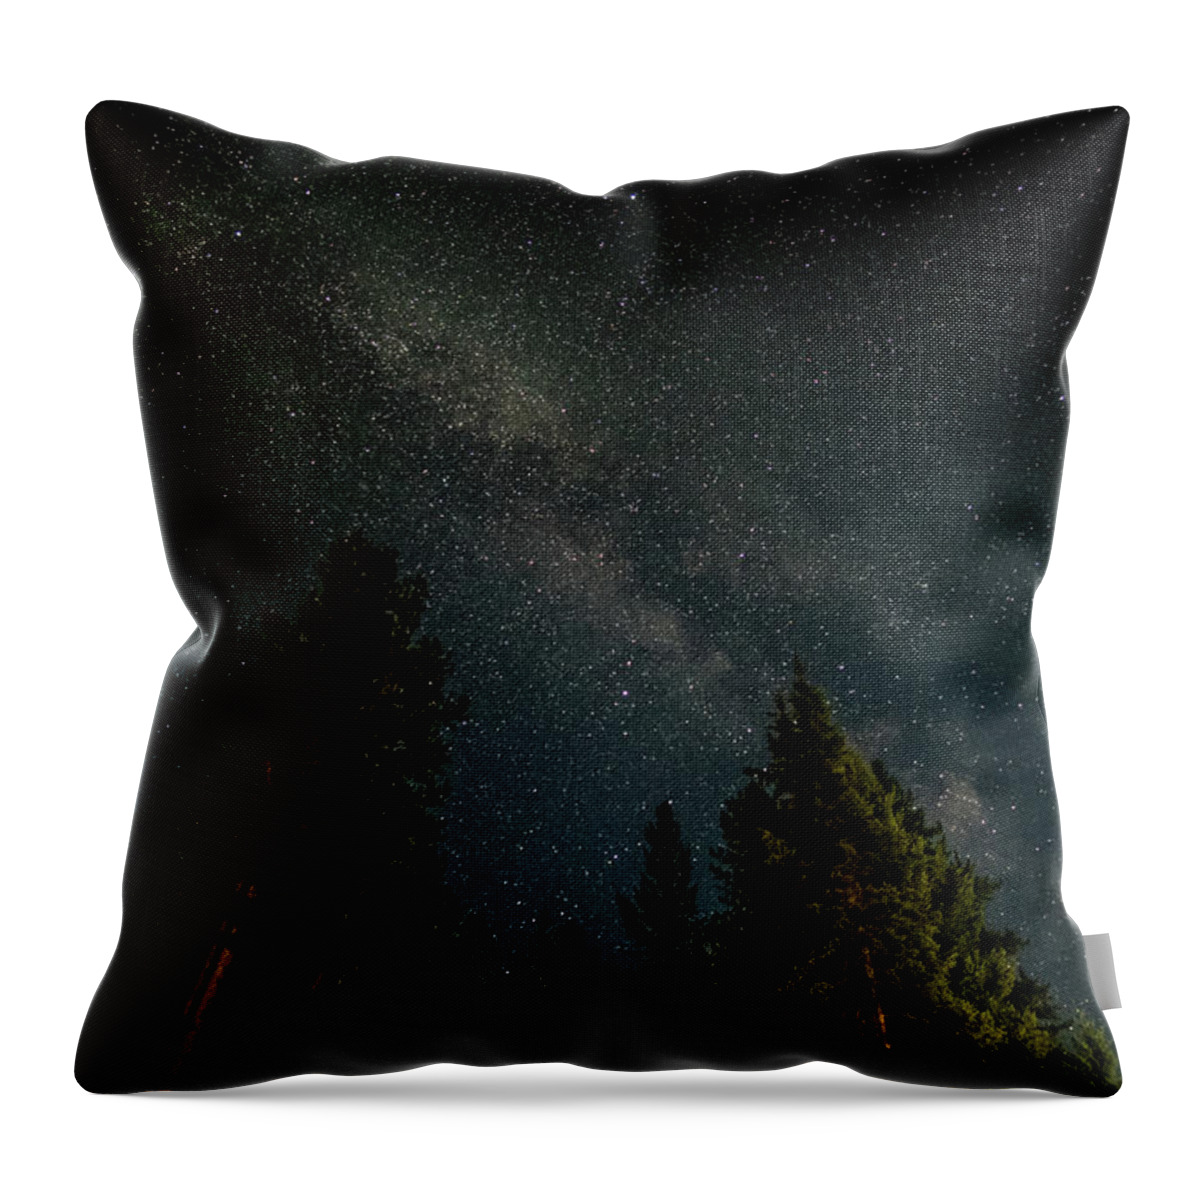 Montana Throw Pillow featuring the photograph Montana night sky by Alberto Zanoni